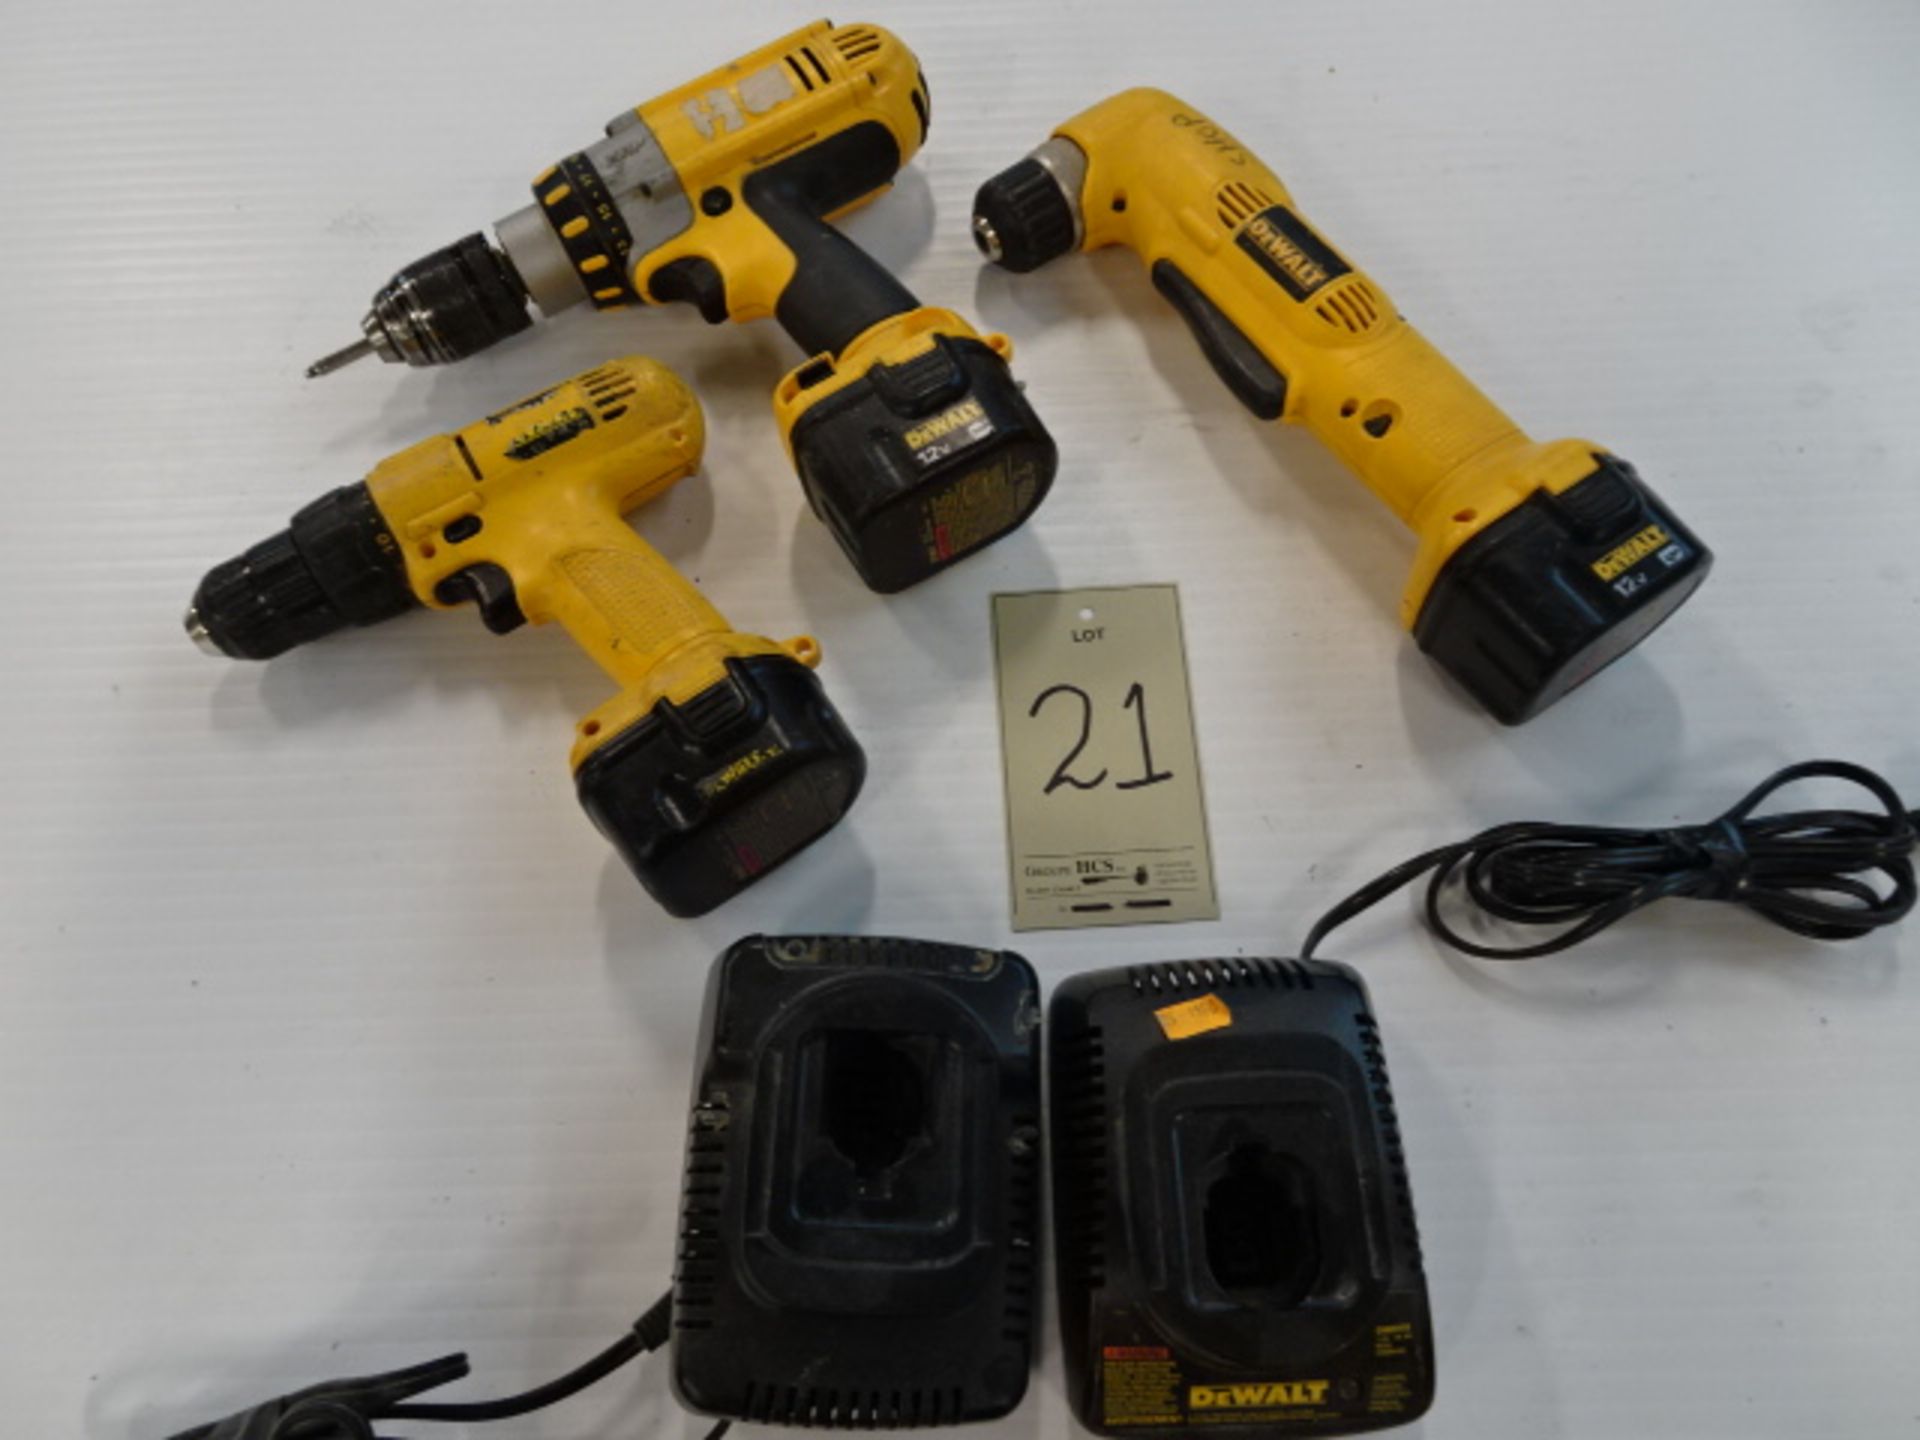 Lot de (3) Outils à batterie 12 volts "Dewalt" / Lot of (3) 12 volts Cordless tools